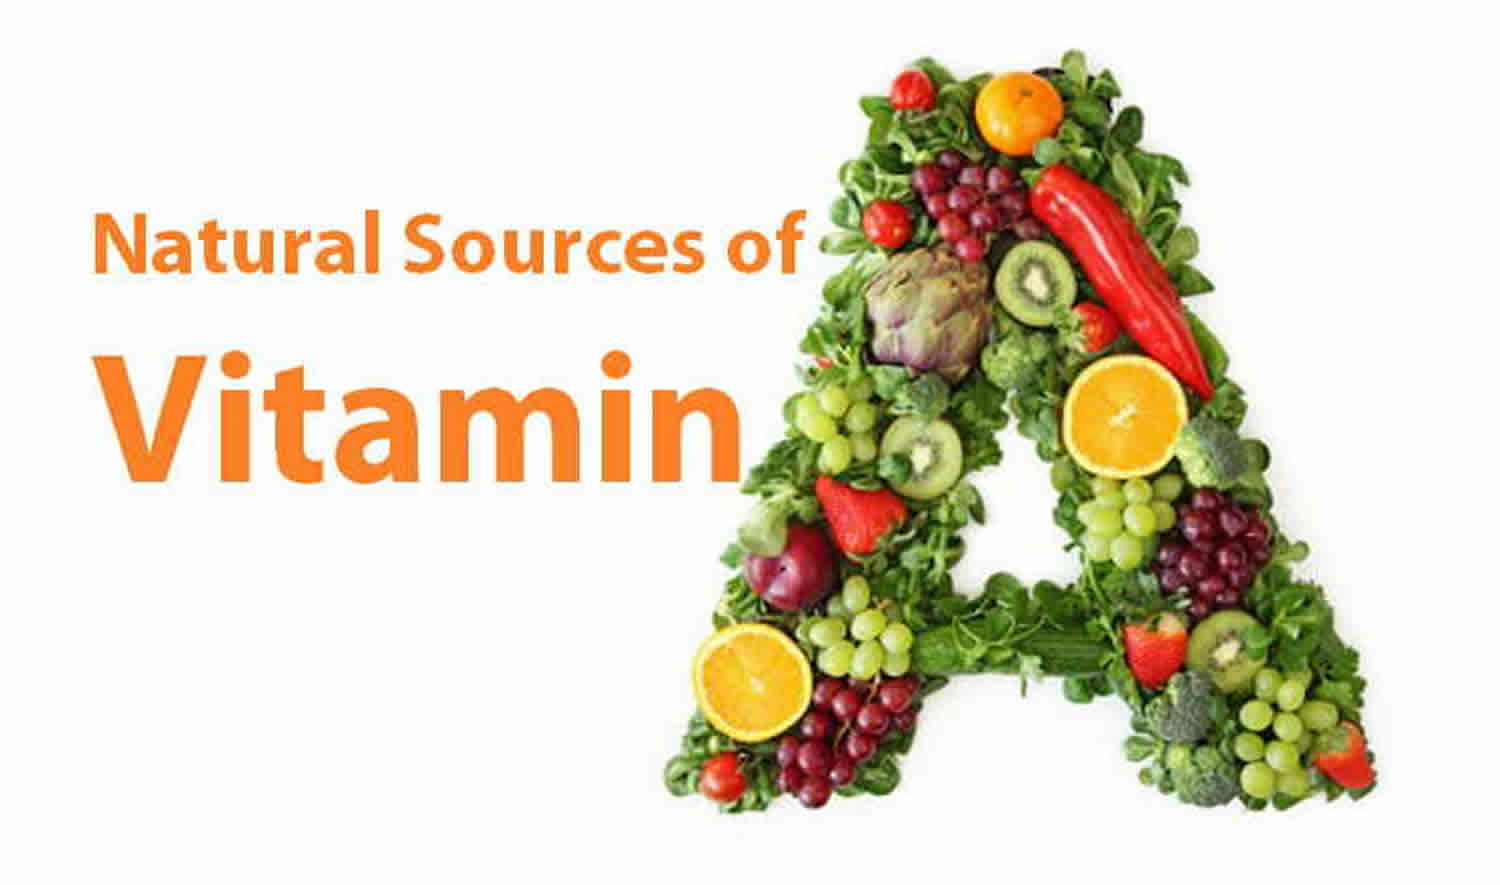 vitamin-a-foods.jpg